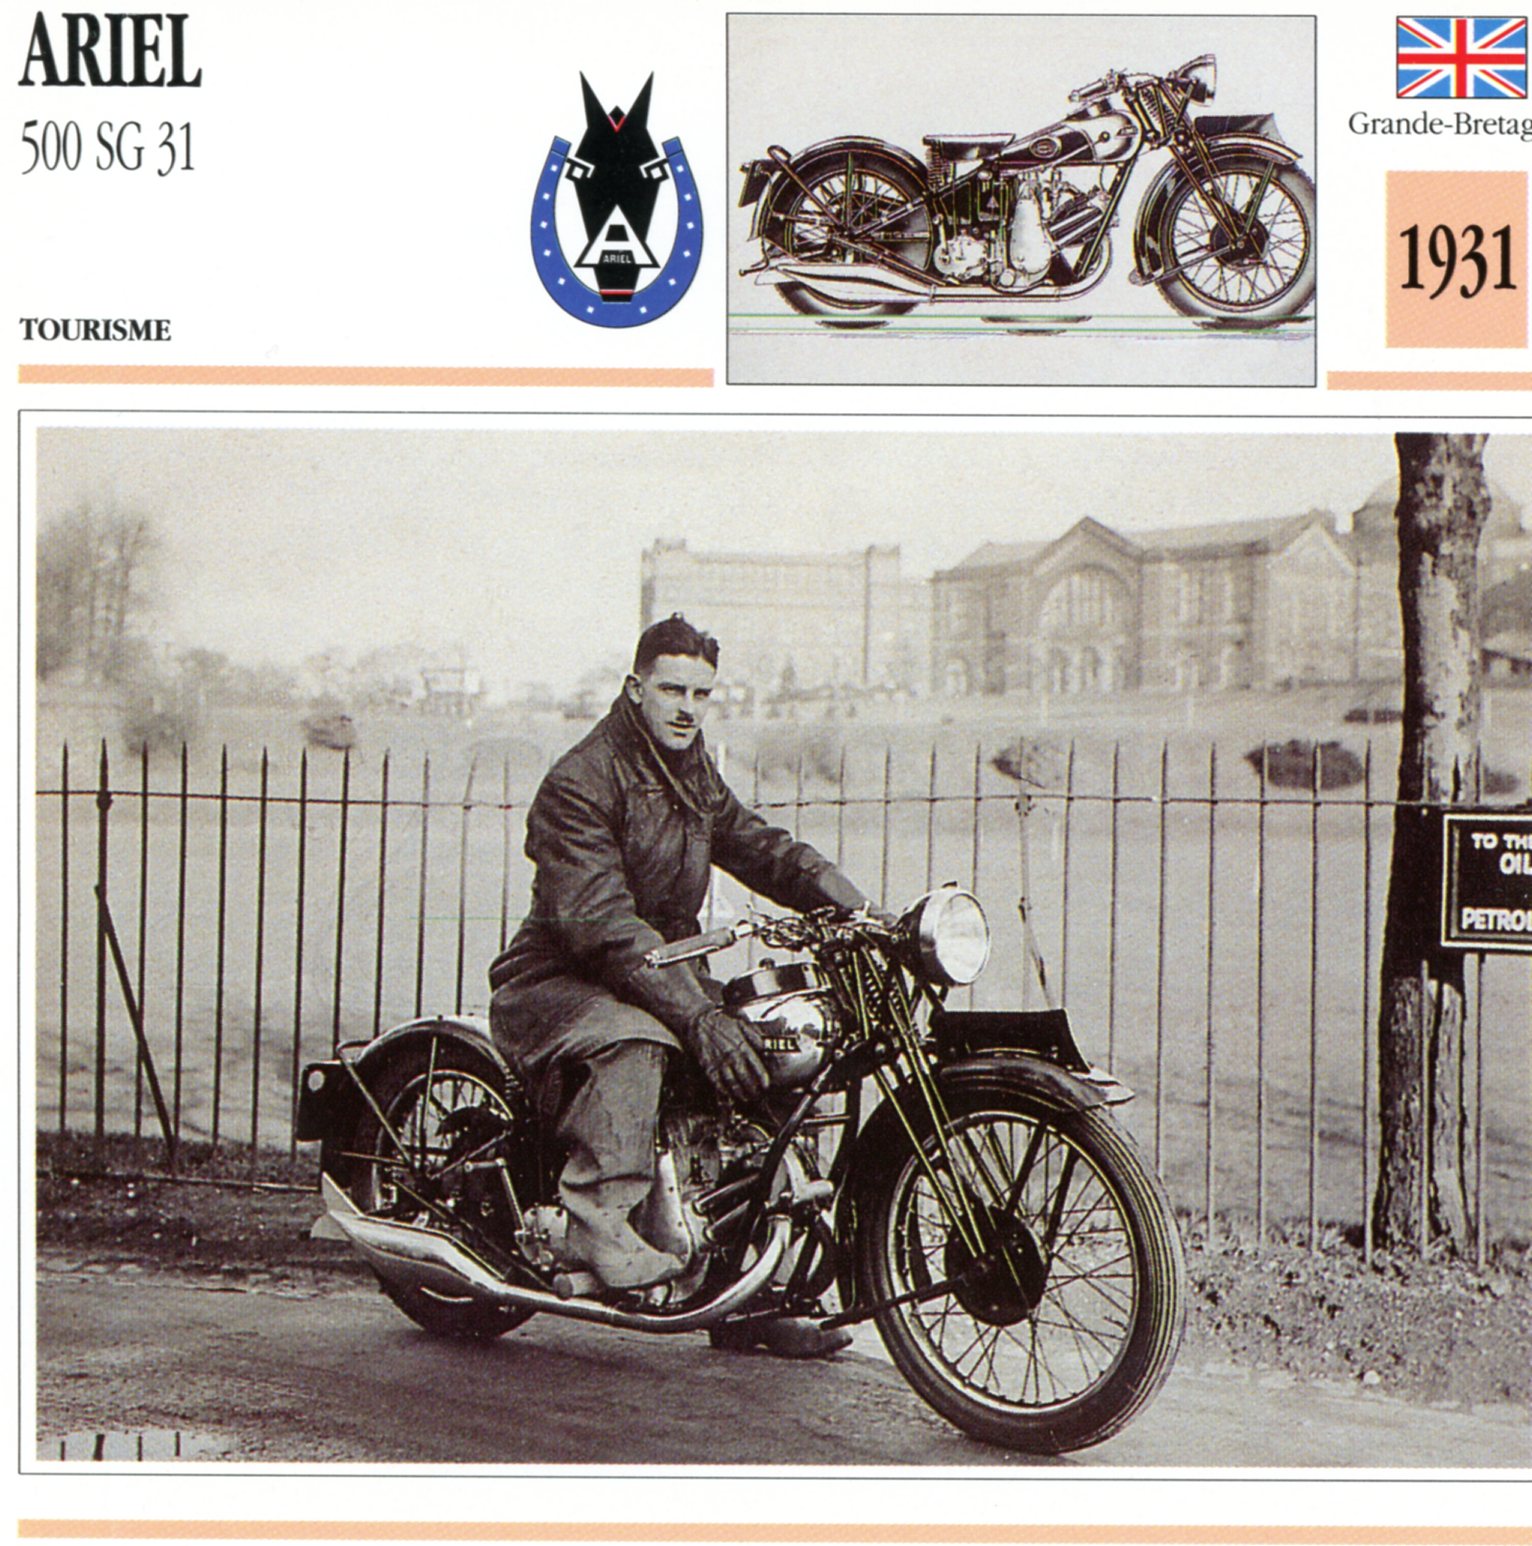 ARIEL 500 SG 31 1931 - CARTE CARD FICHE MOTO CARACTERISTIQUES